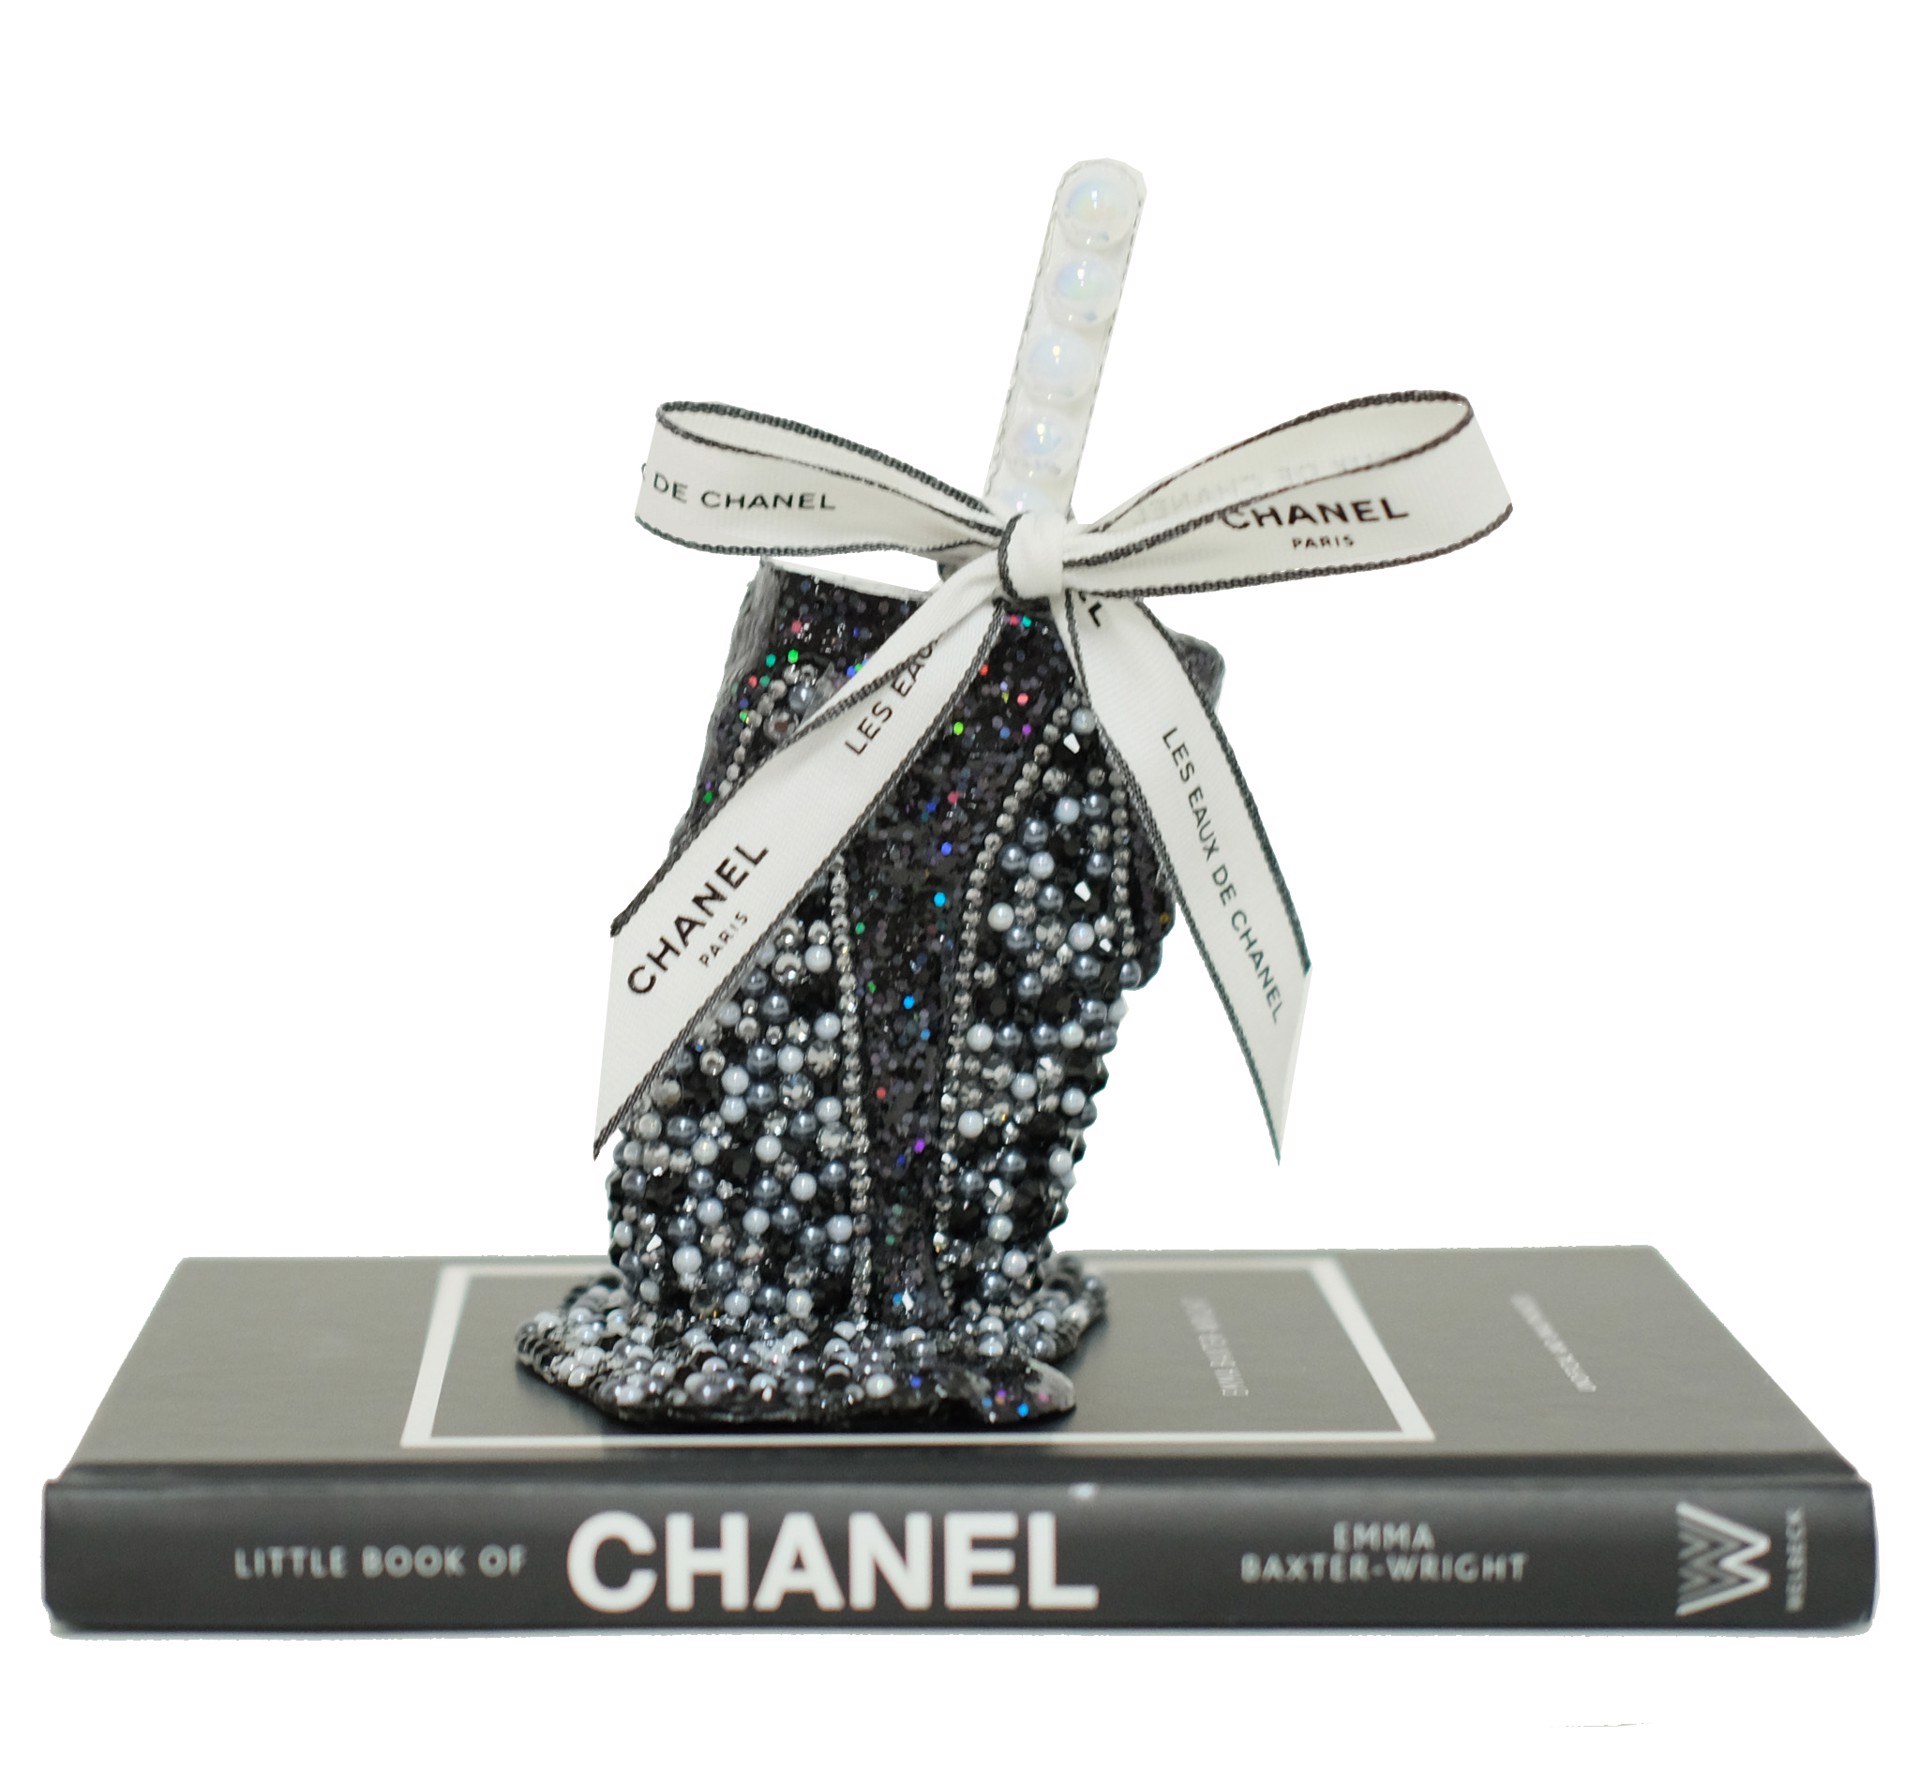 Pantone 19-0303 TCX "Chanel" Pop by Betsy Enzensberger